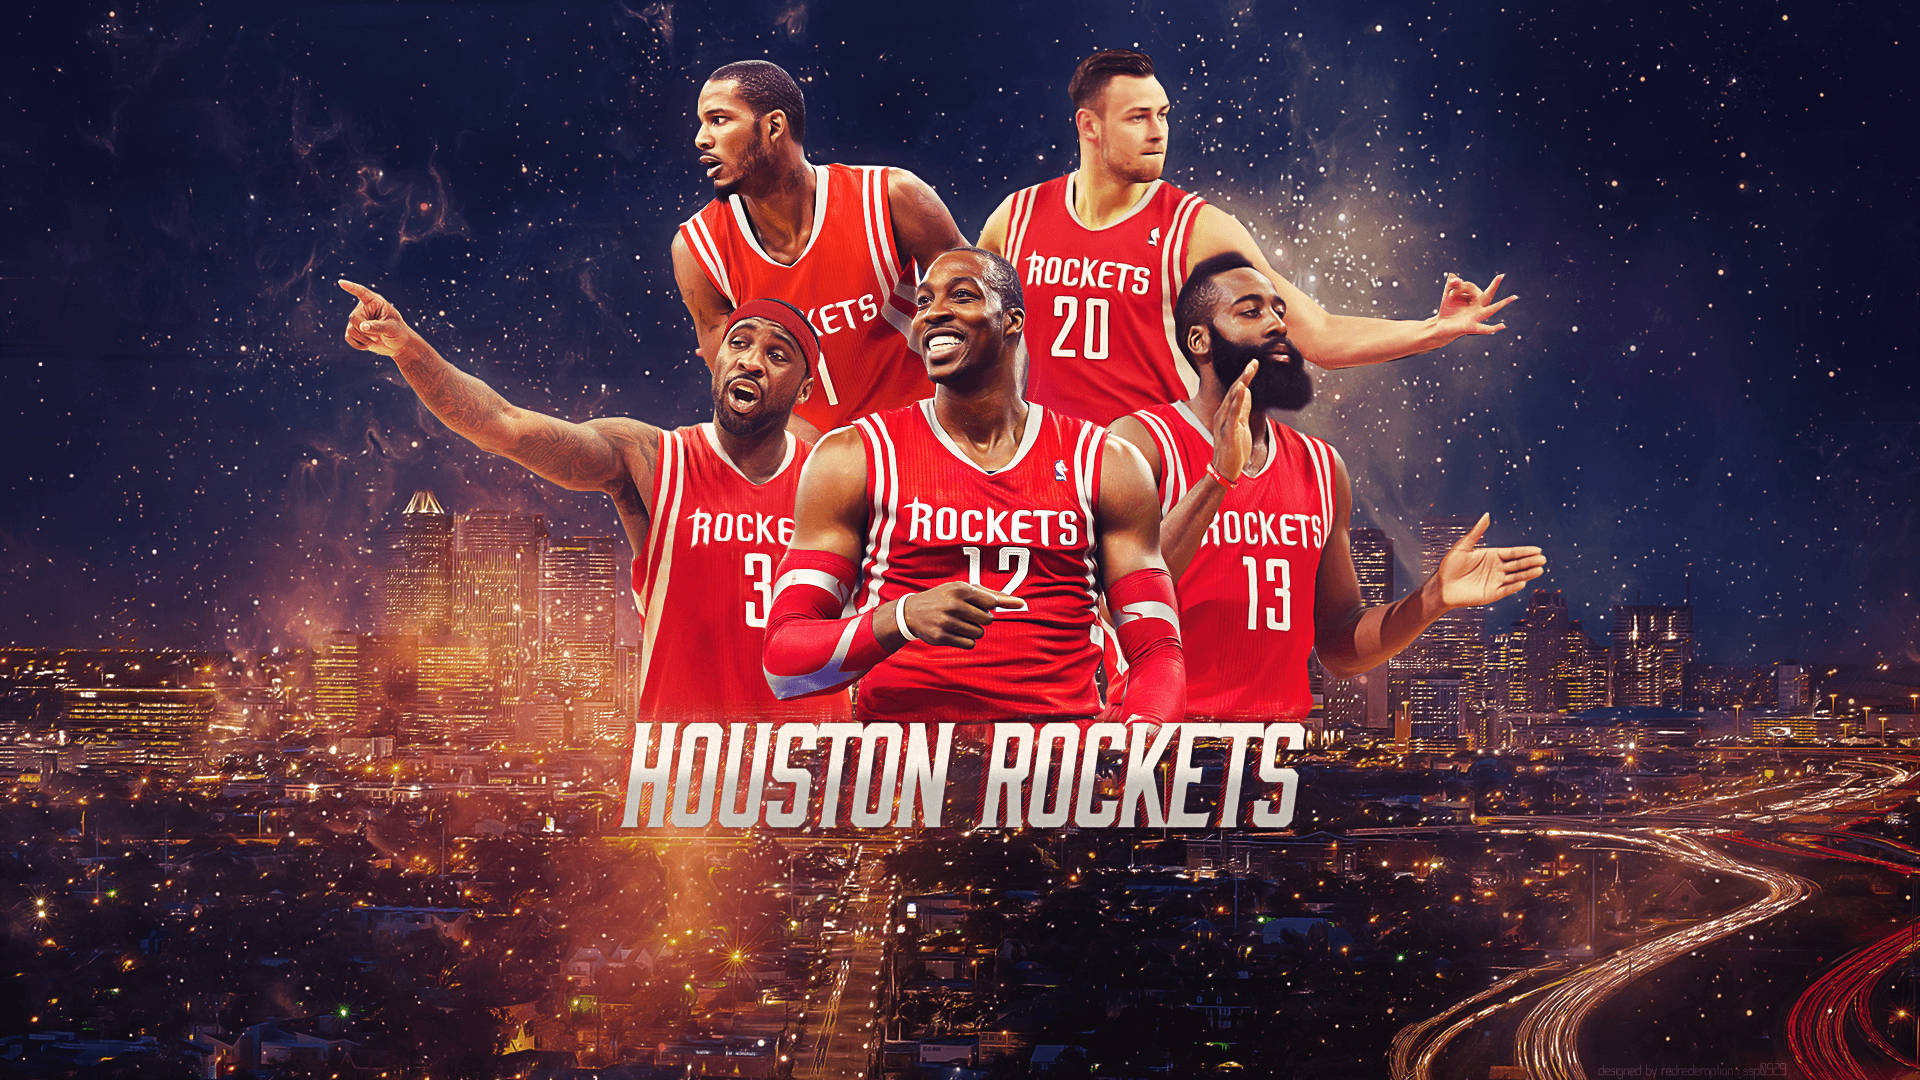 Houston Rockets Basketball Team Wallpaper